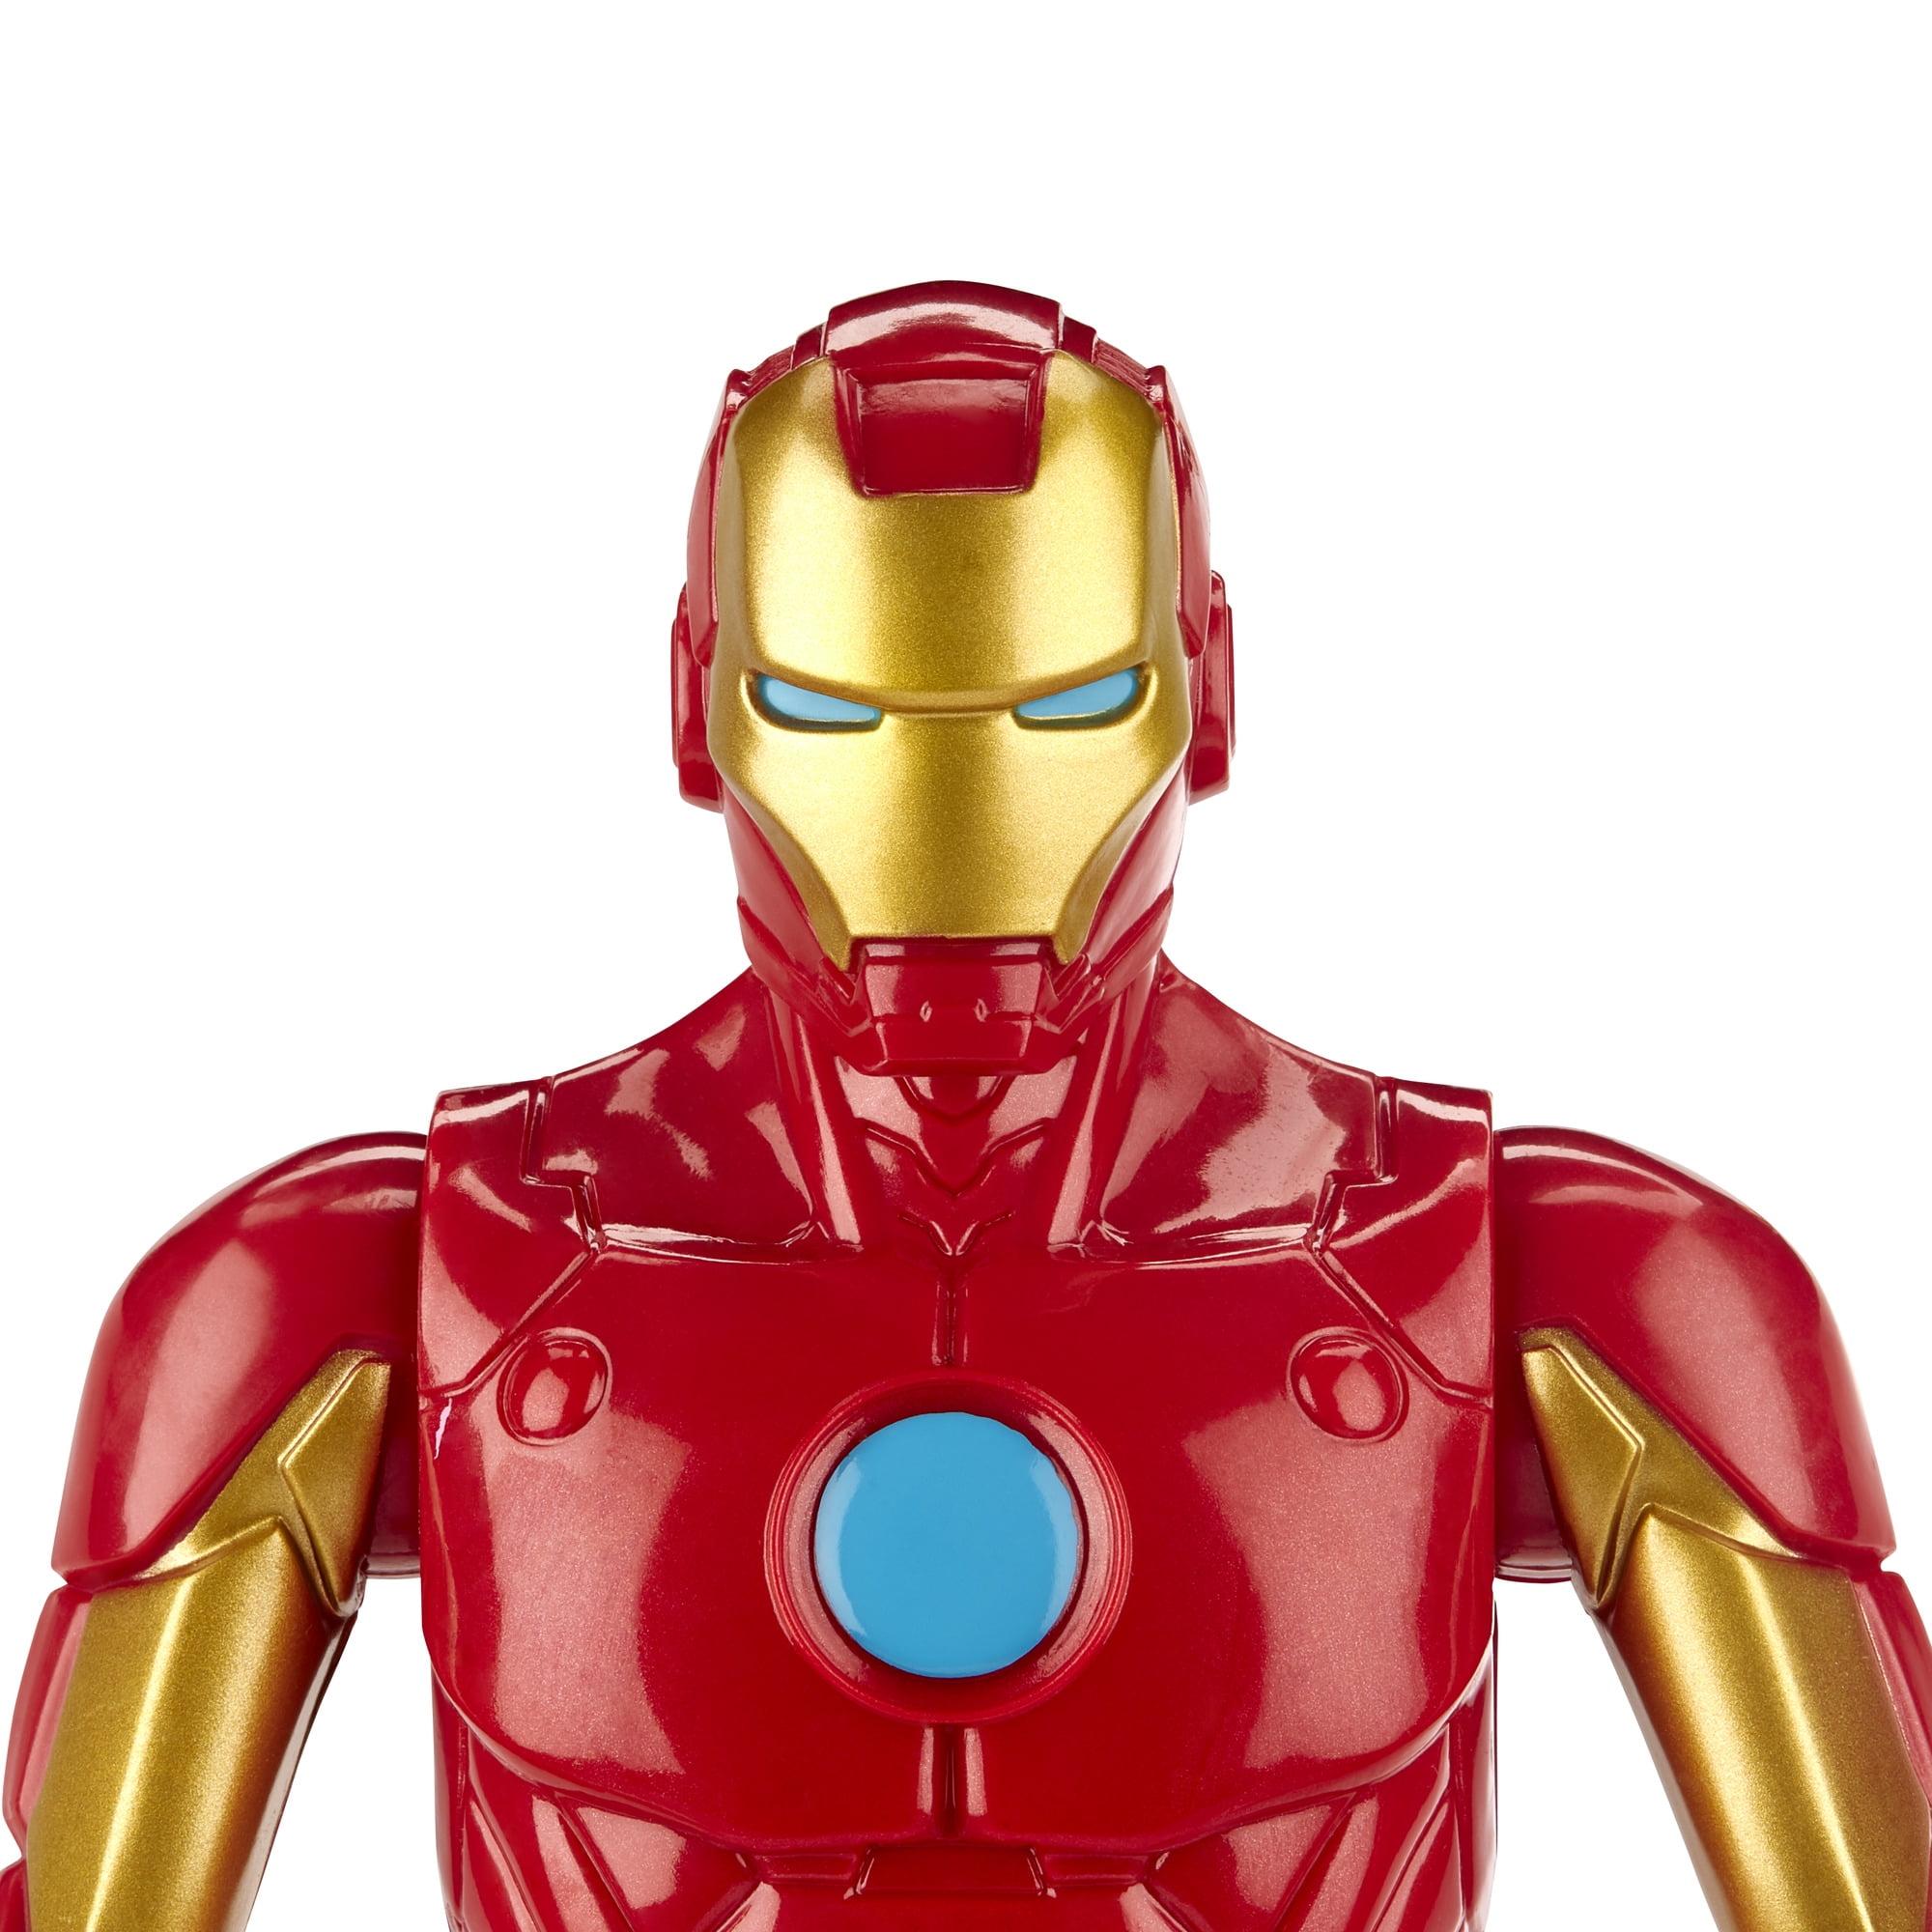 Marvel Avengers Tony Stark Iron Man End Game Minifigure ARRIVES IN 2-4 DAYS 